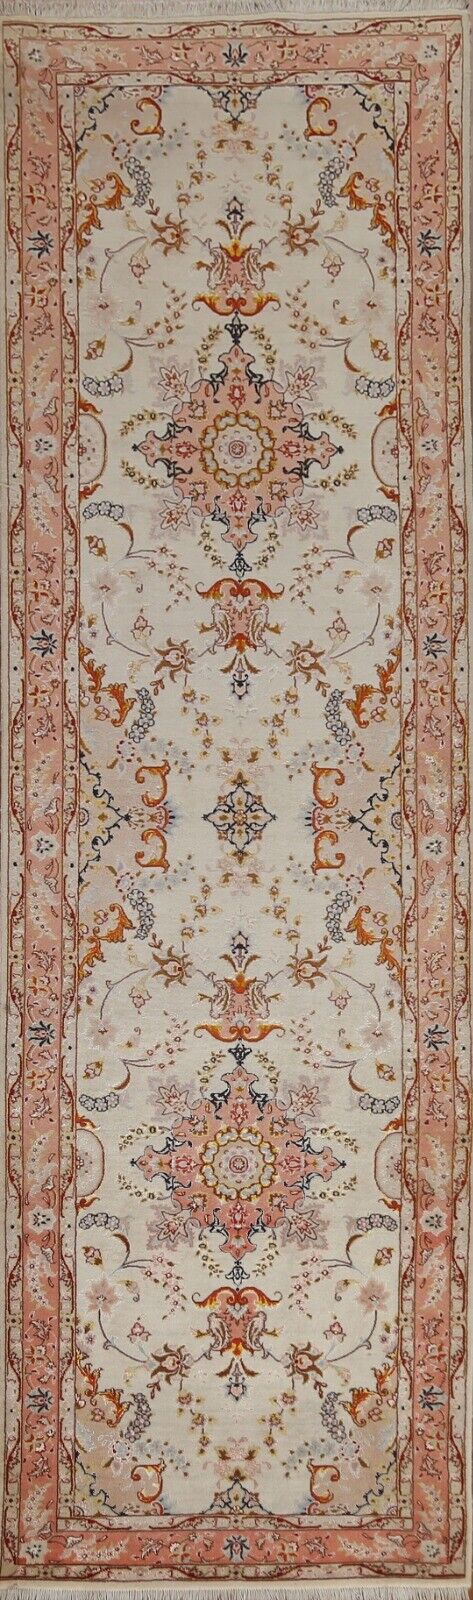 324 Knots Wool/ Silk Ivory Tebriz Runner Rug 2' 7" x 10' 5" Hand-knotted Carpet